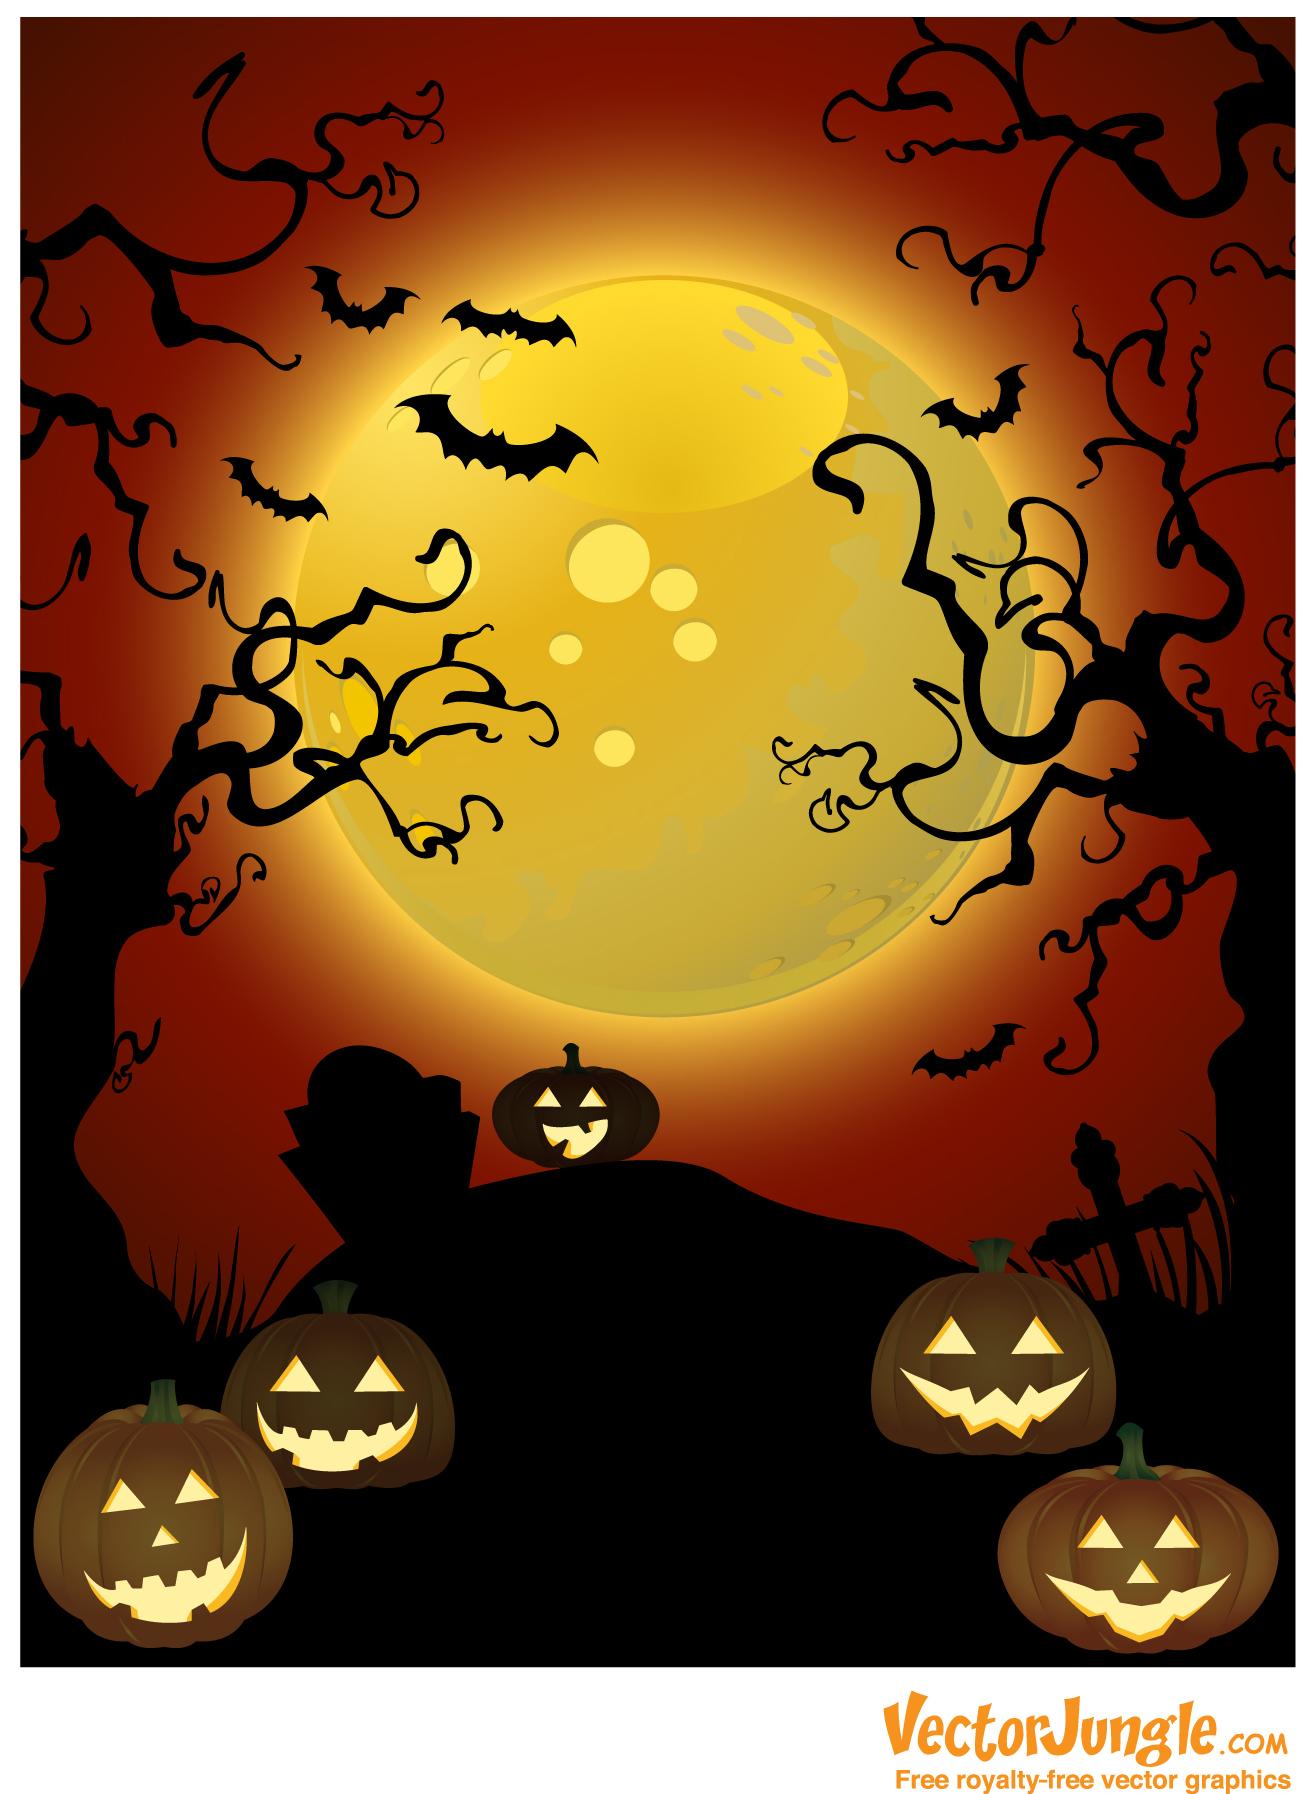 Free Scary Halloween Wallpaper Downloads